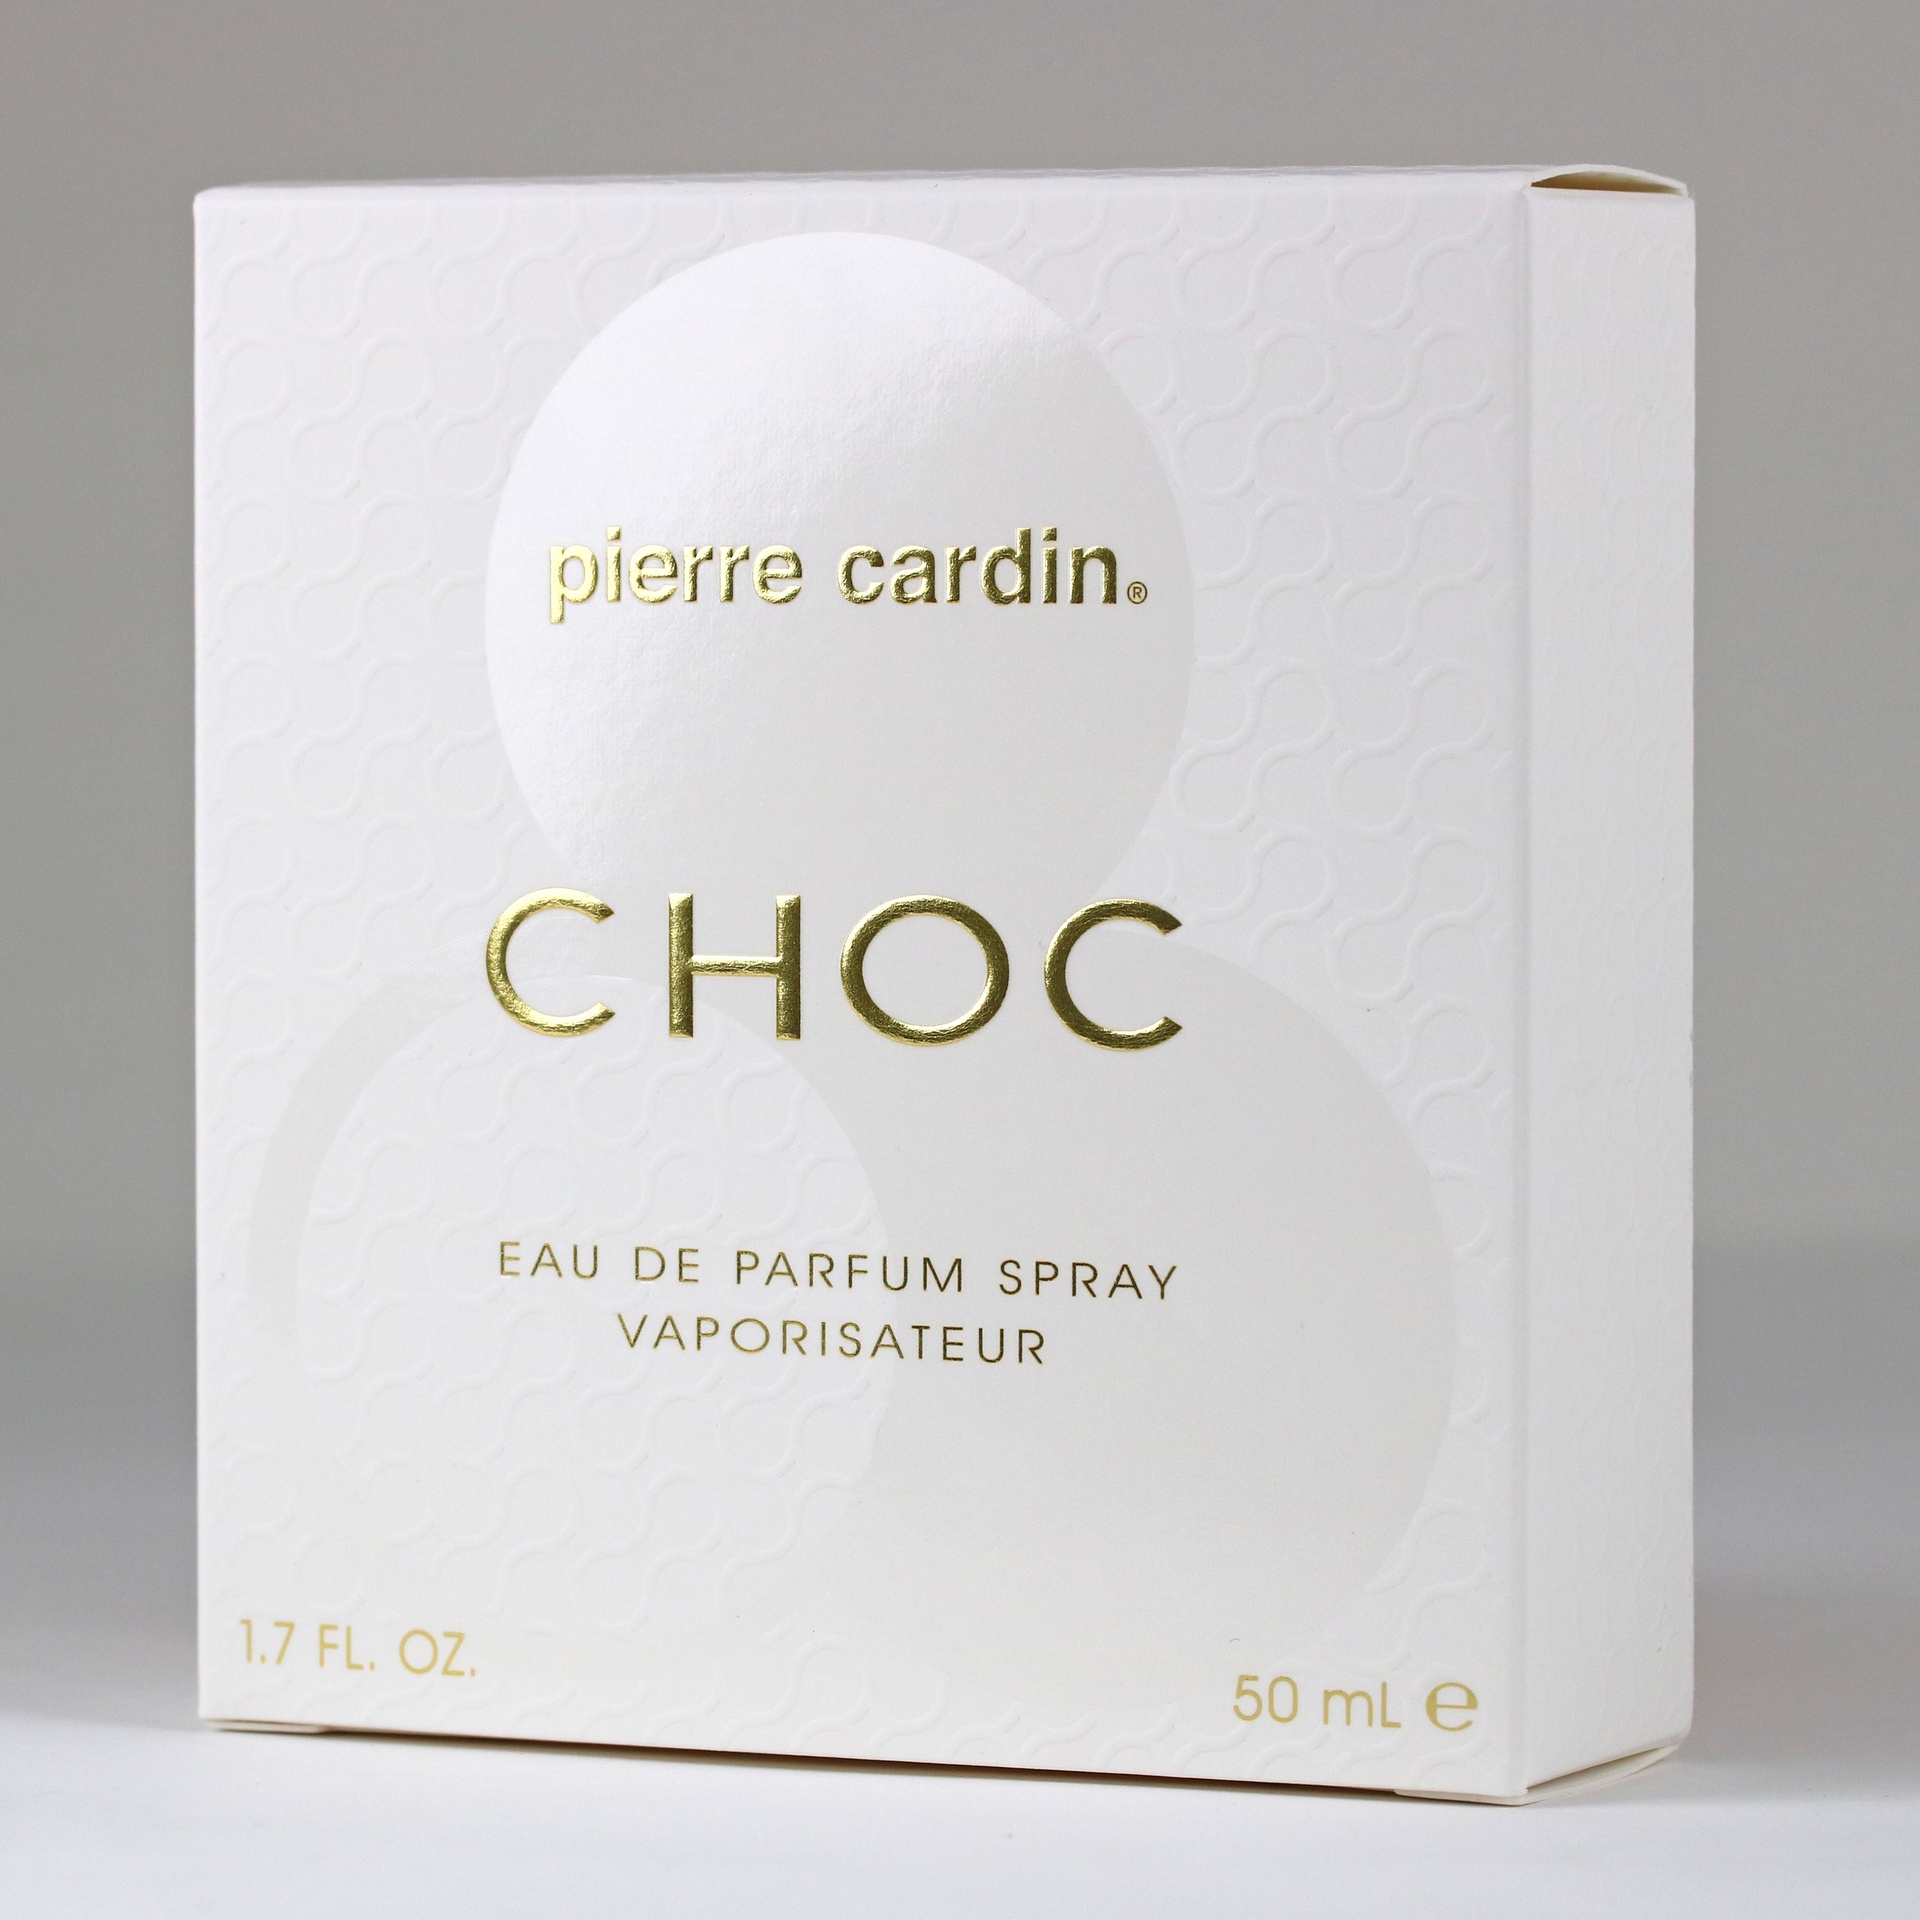 Pierre Cardin Choc folding carton